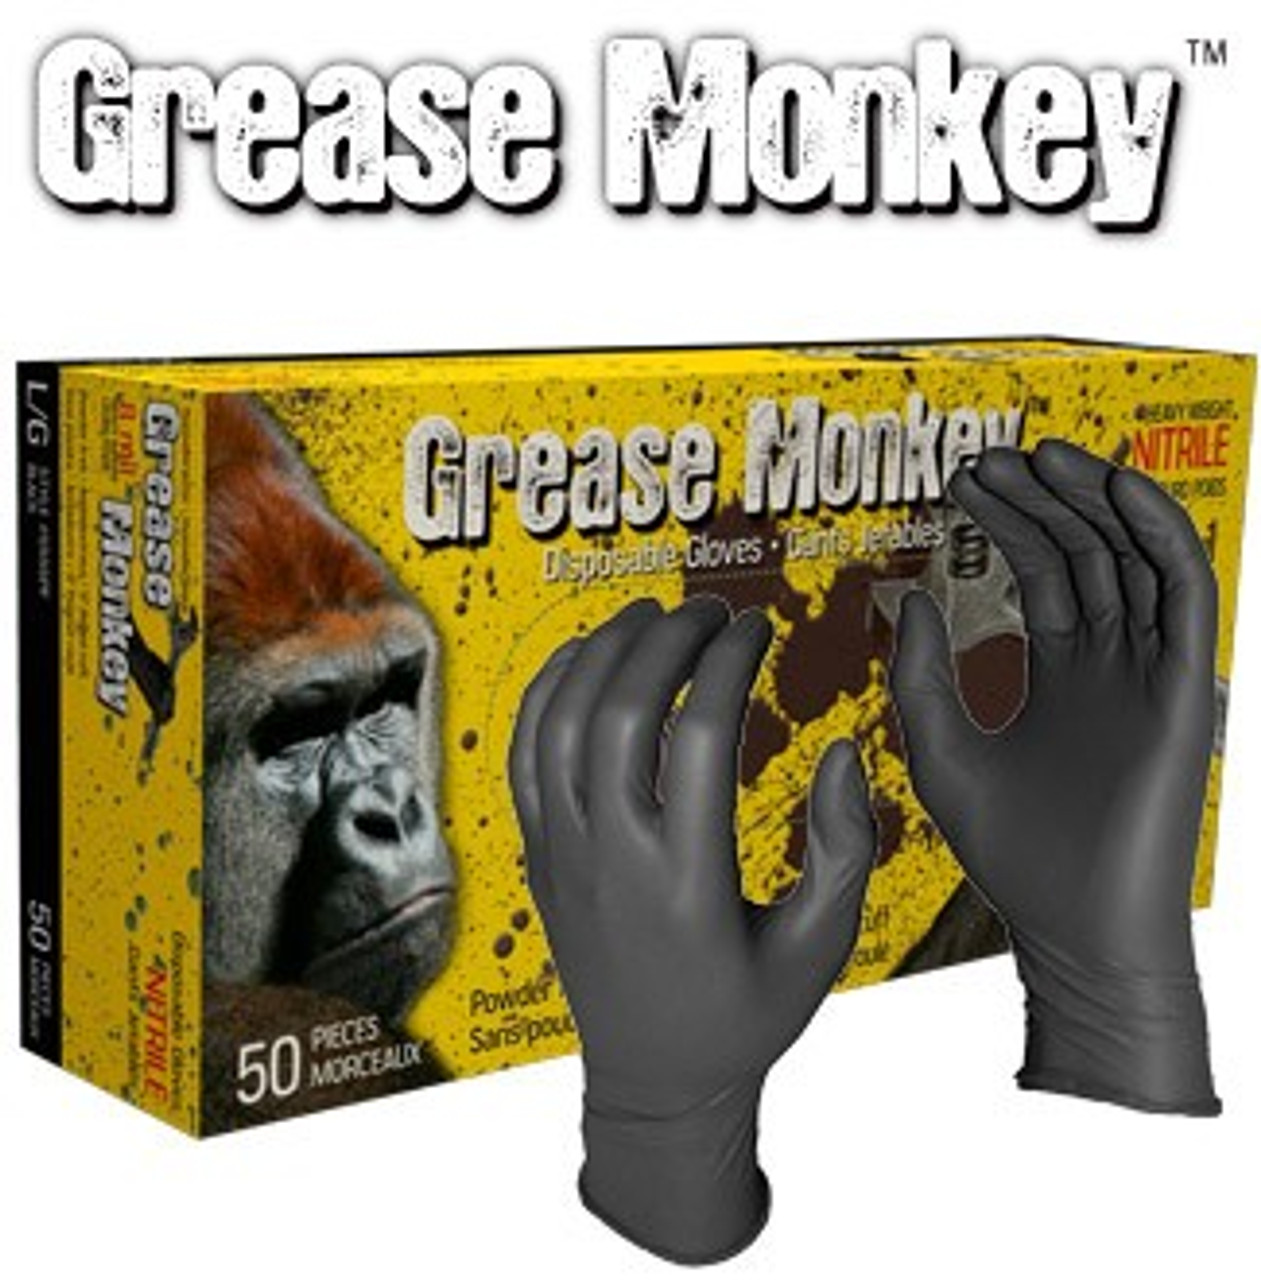 Grease Monkey Nitrile Gloves, Medium (Box of 50)